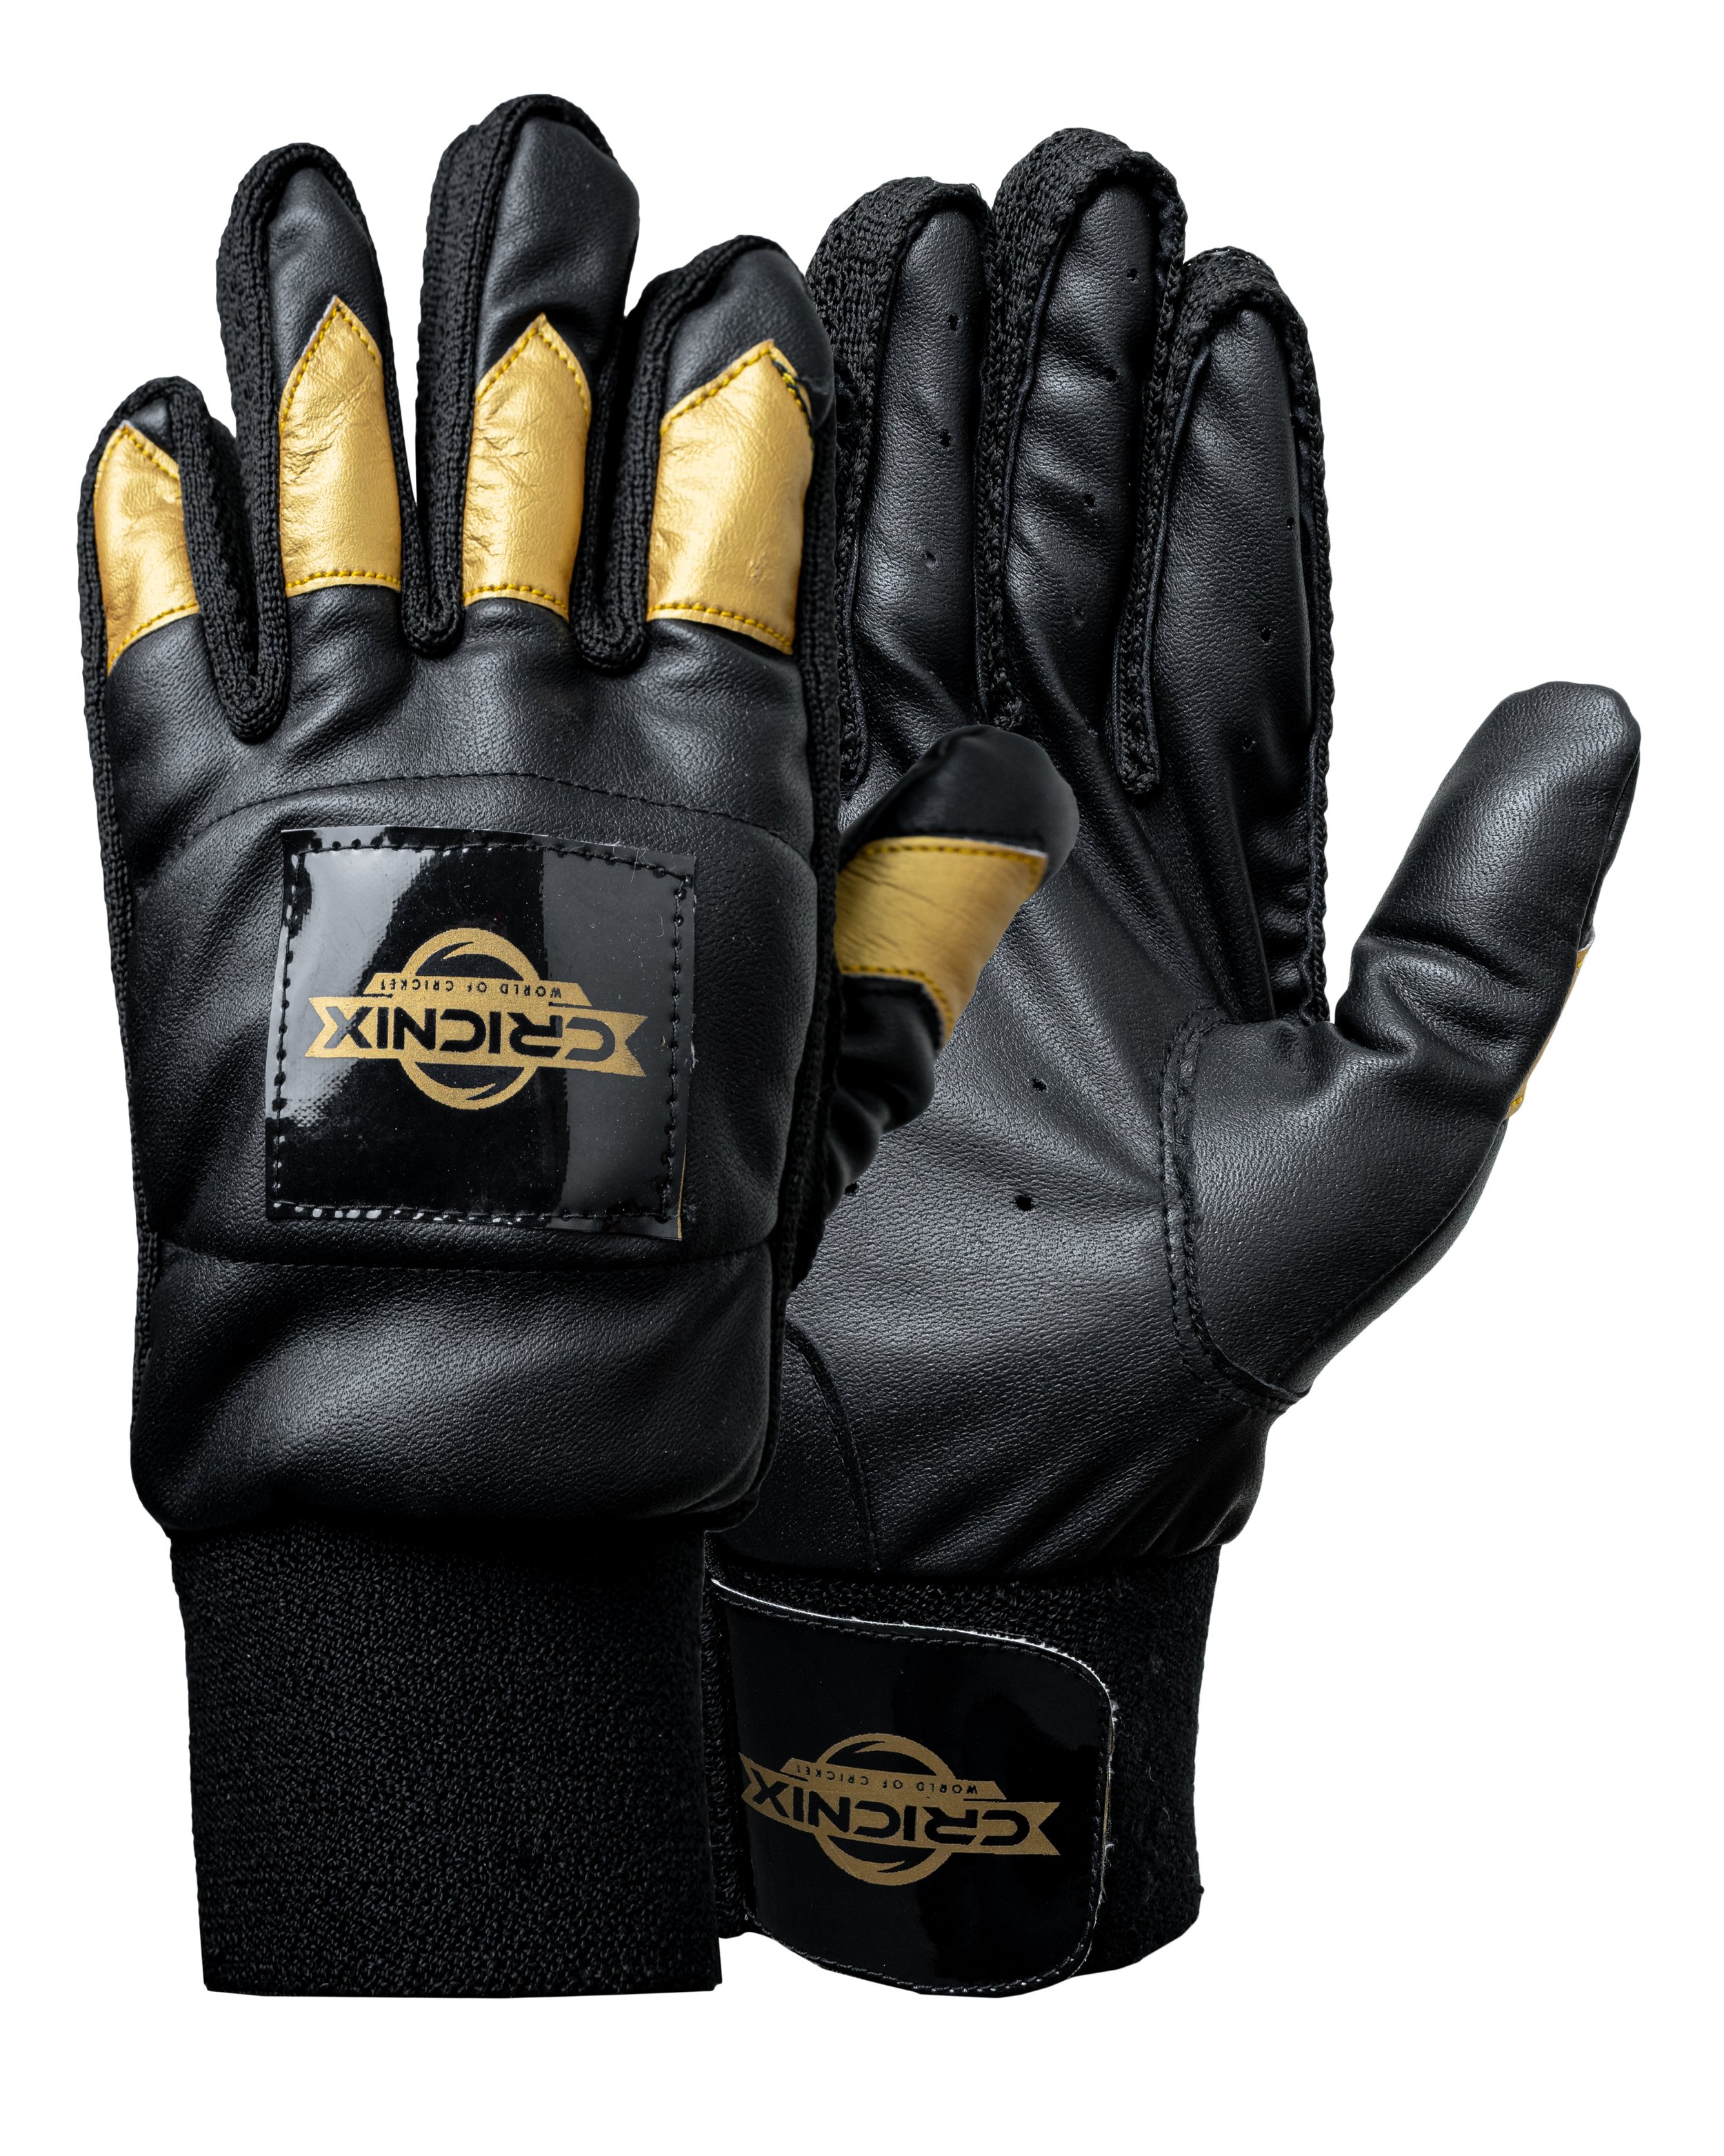 Black Gloves Pair.jpg